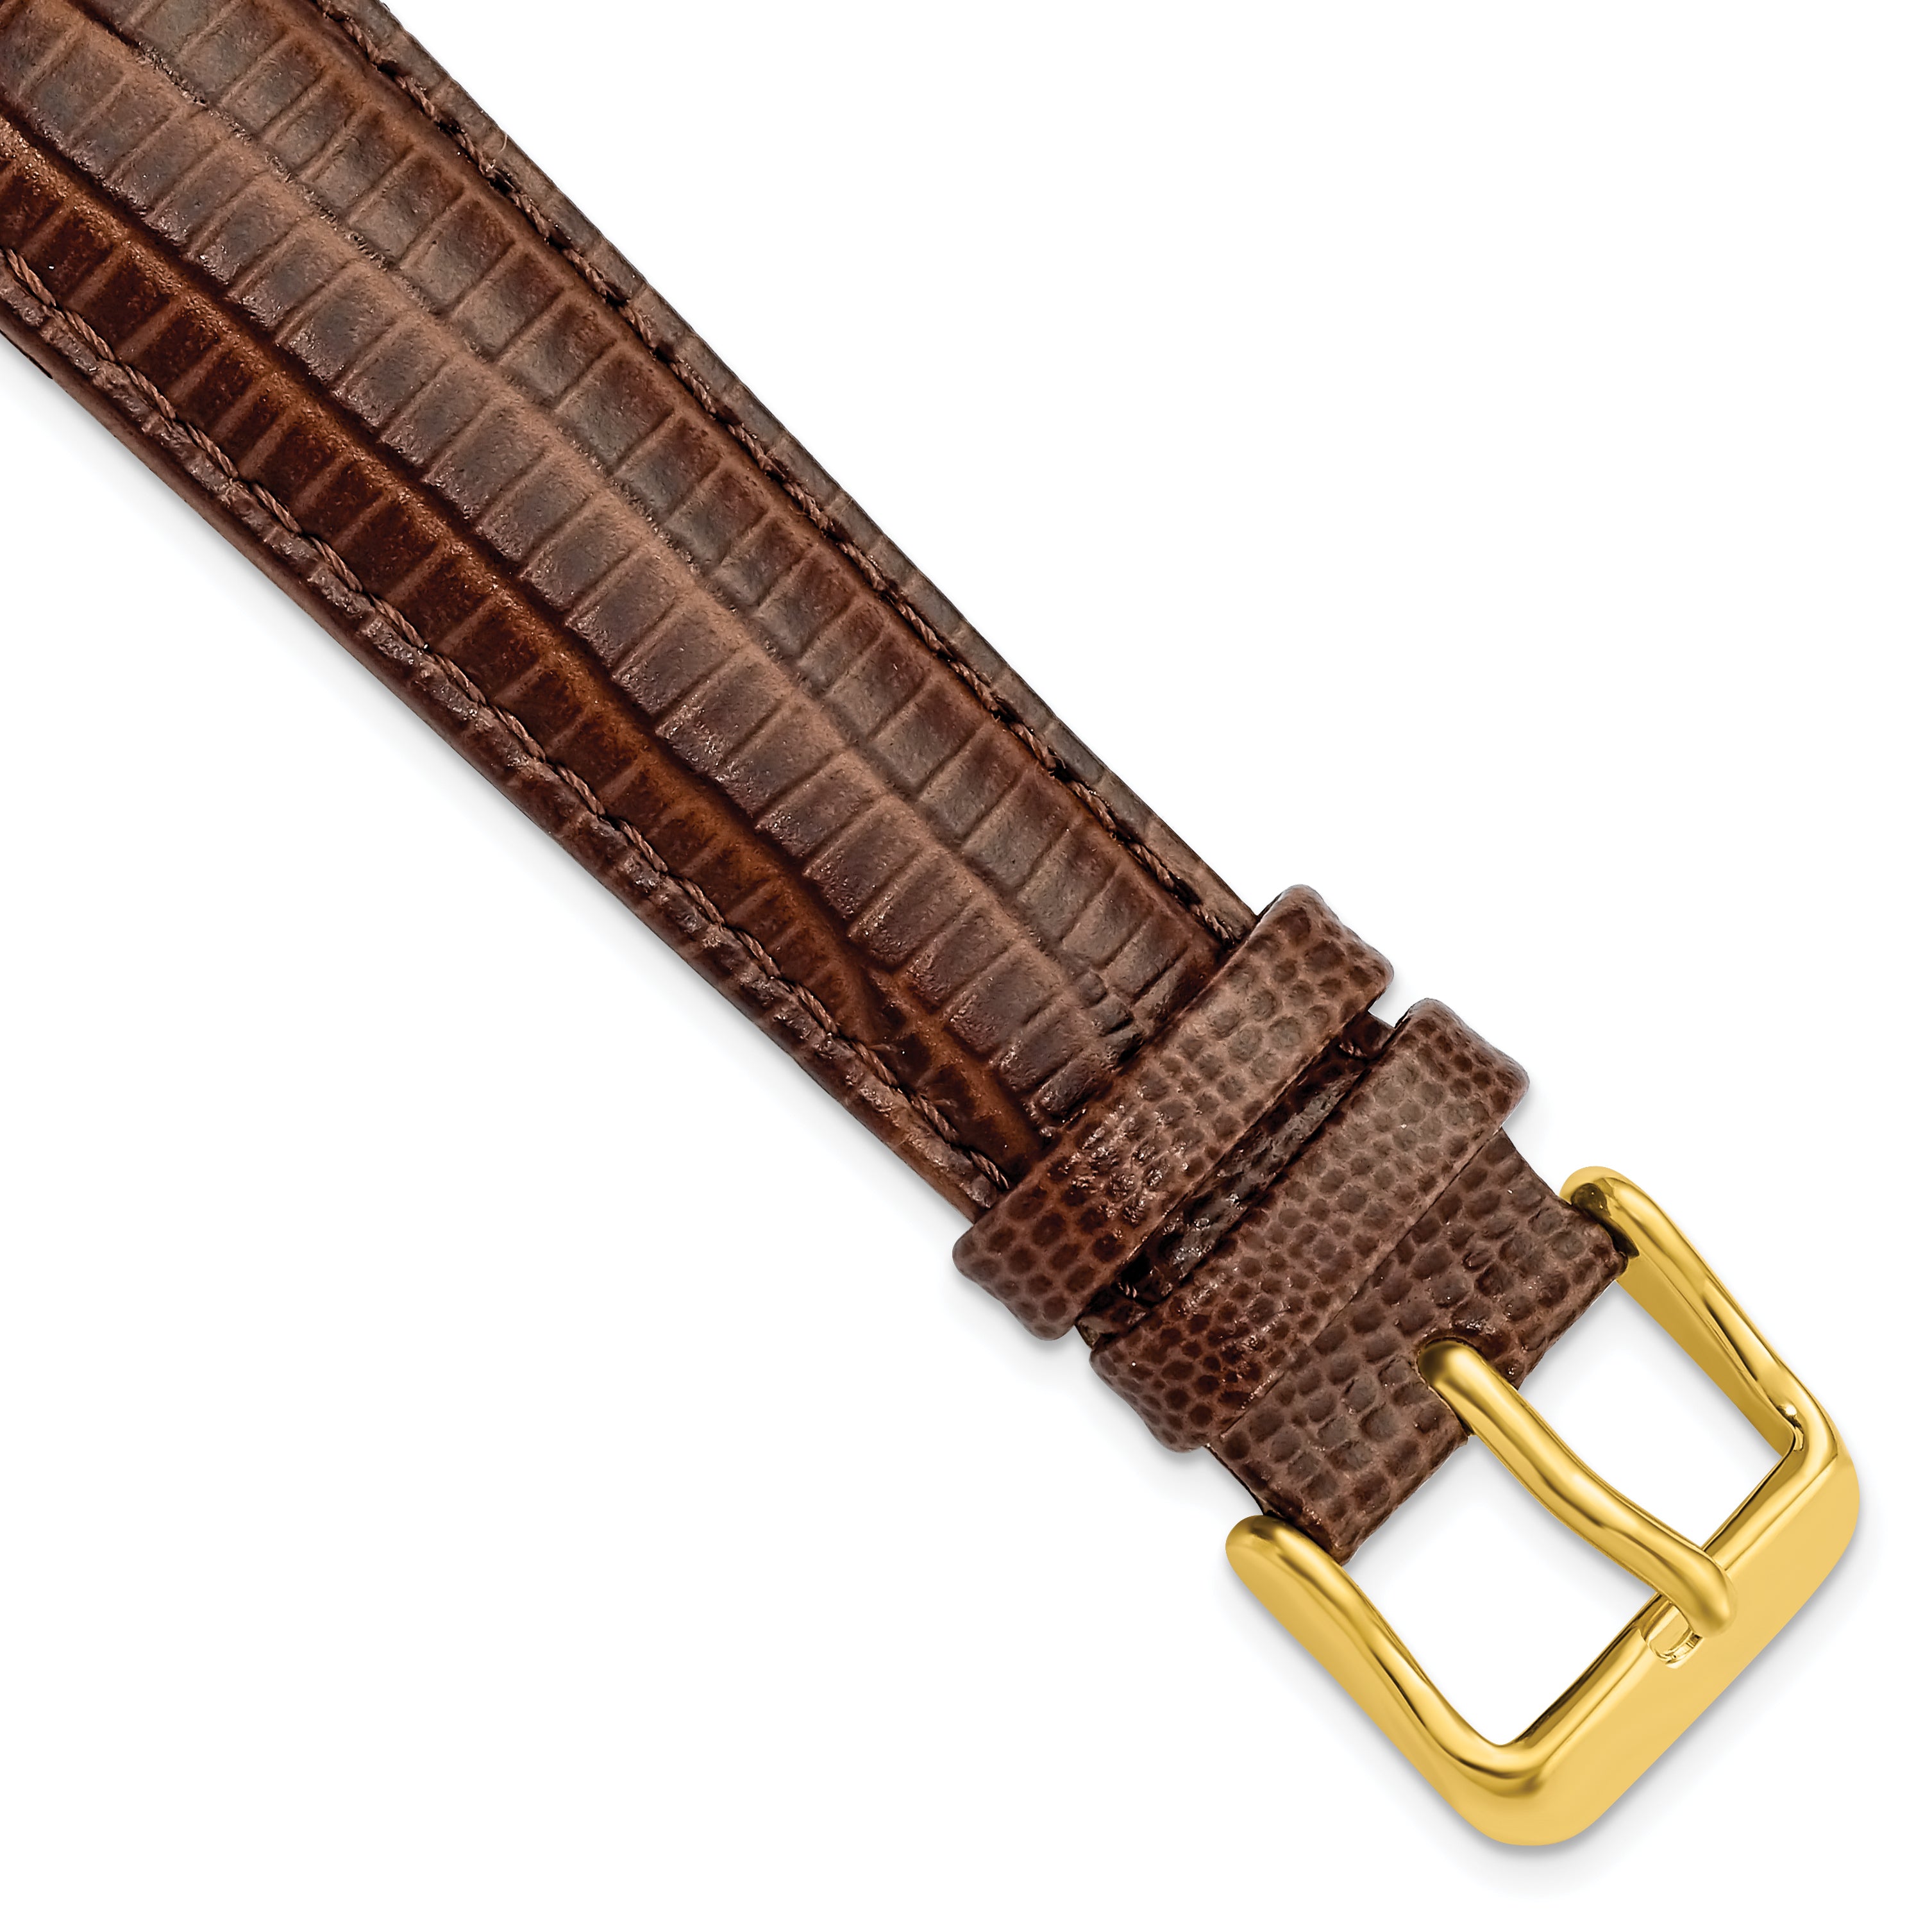 DeBeer 19mm Havana Teju Liz Grain Leather with Gold-tone Buckle 7.5 inch Watch Band